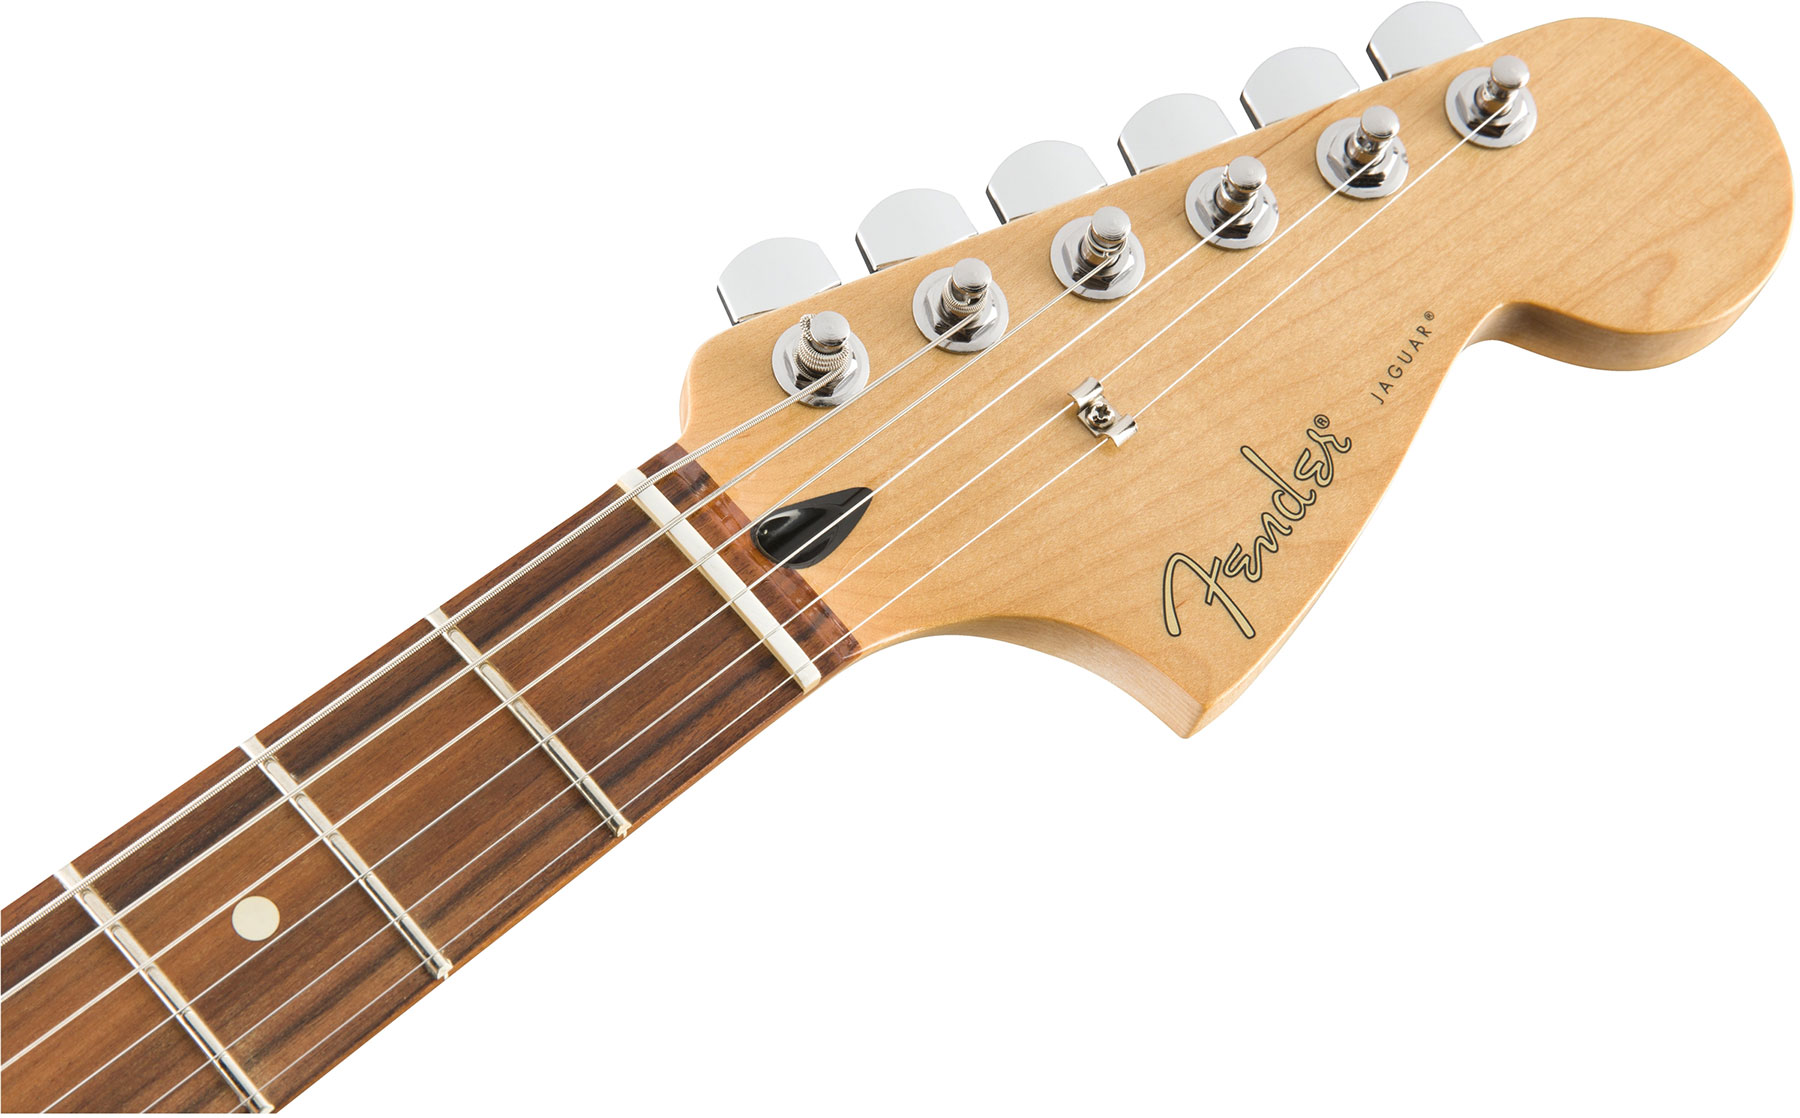 Fender Jaguar Player Mex Hs Pf - Black - Retro rock electric guitar - Variation 3